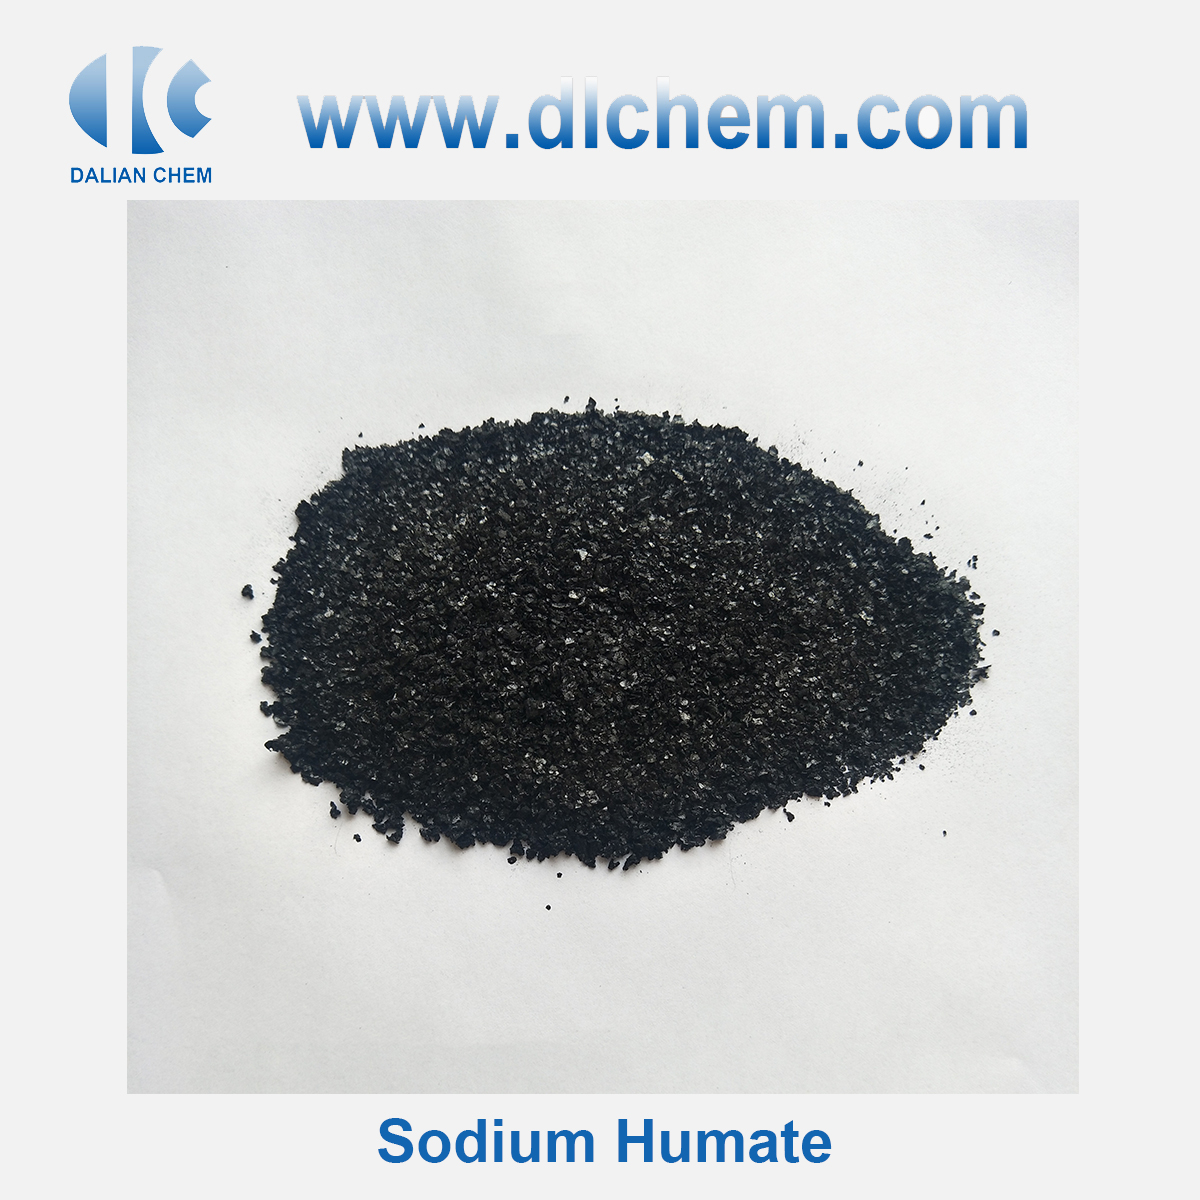 Sodium Humate CAS No.68131-04-4